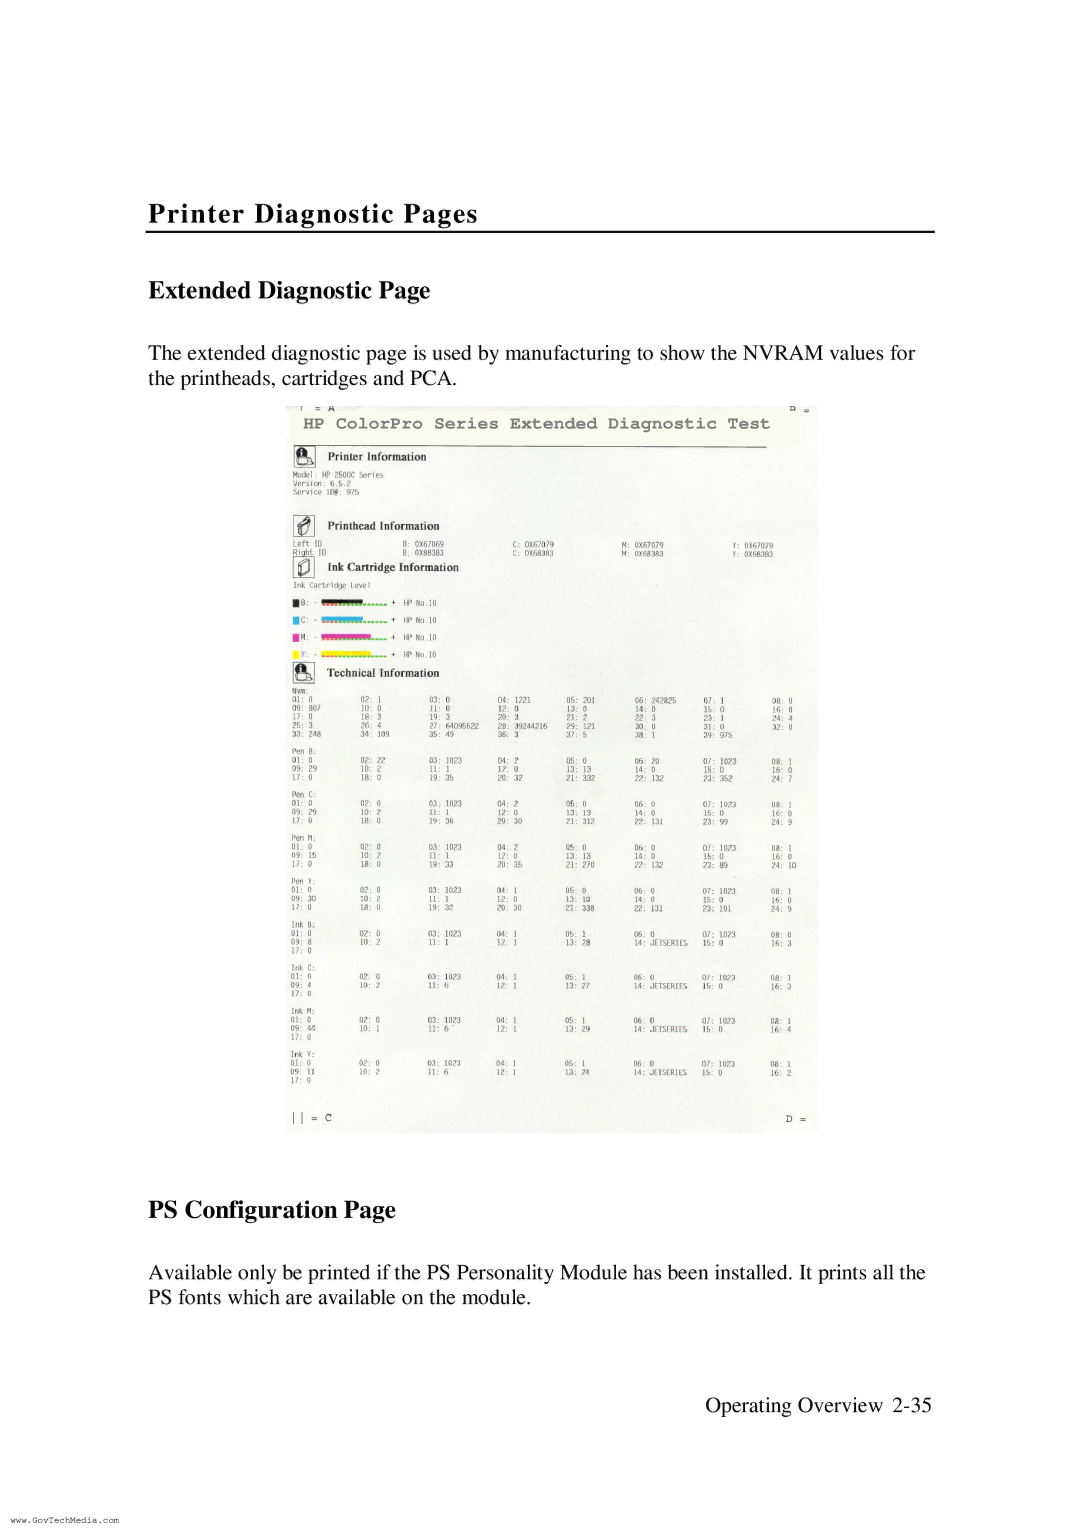 HP ColorPro CAD manual Extended Diagnostic, PS Configuration 